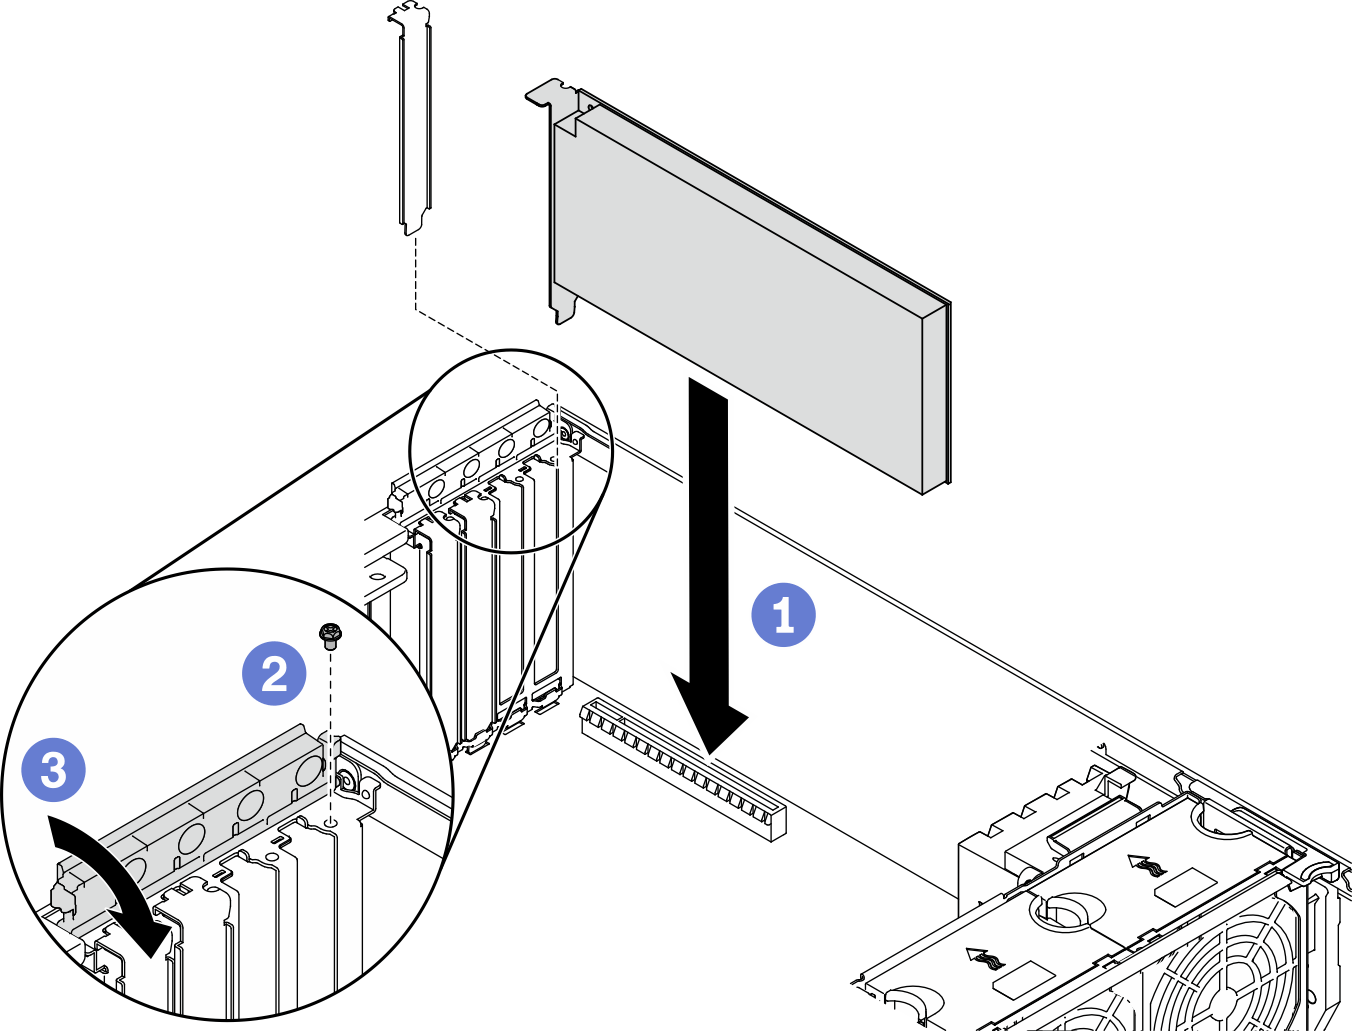 PCIe adapter installation